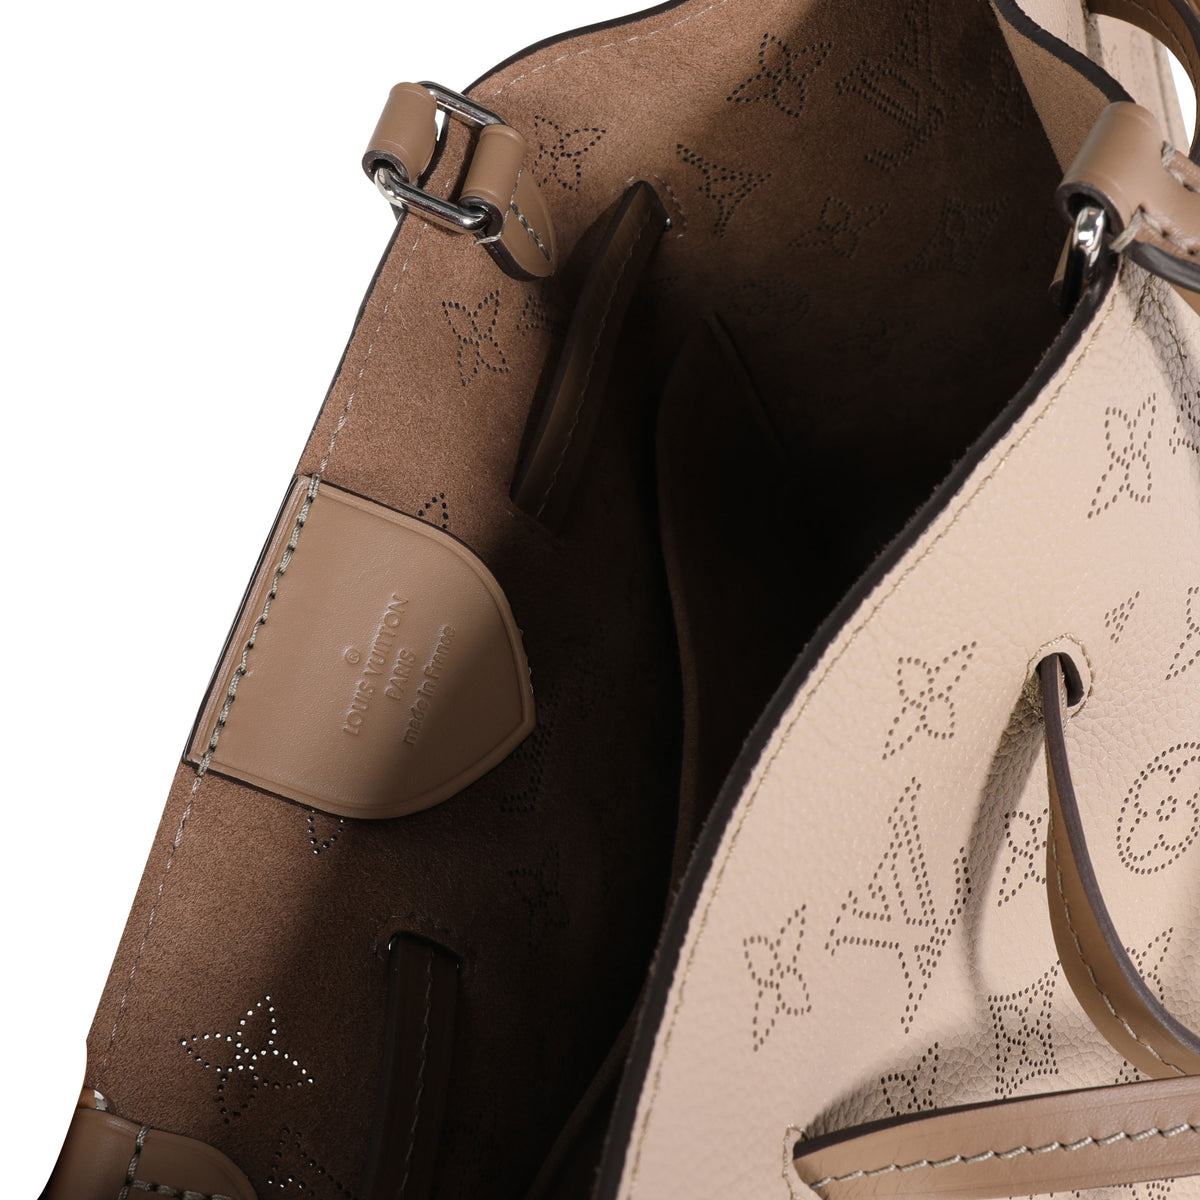 Louis Vuitton, Bags, Like New Rare Gorgeous Mahina Leather Louis Vuitton  Hobo